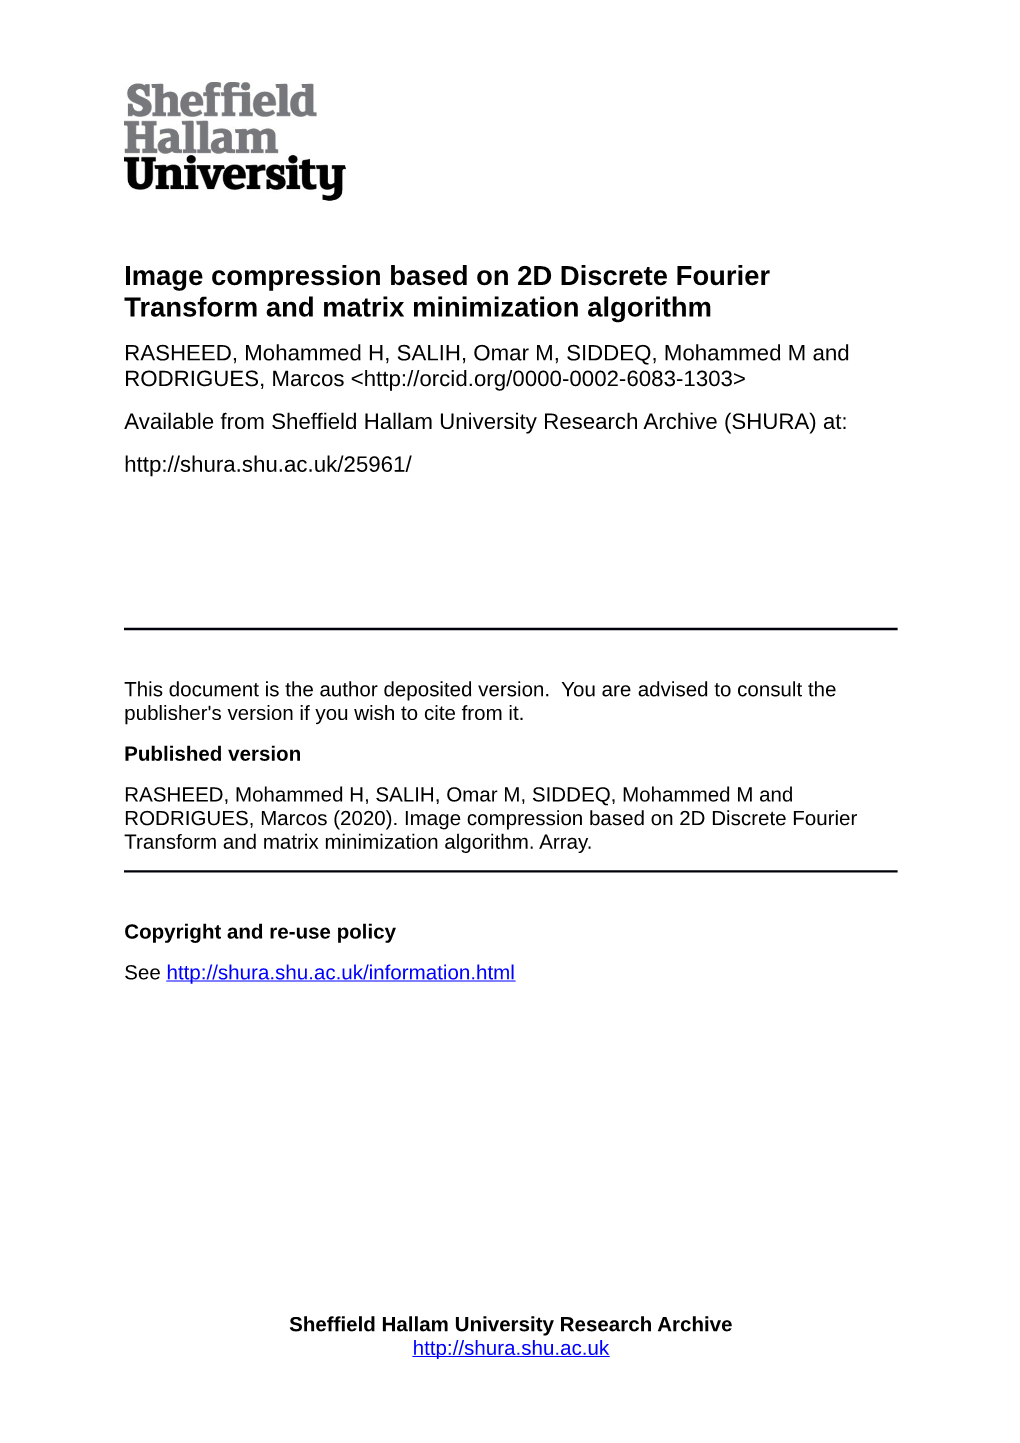 Image Compression Based on 2D Discrete Fourier Transform